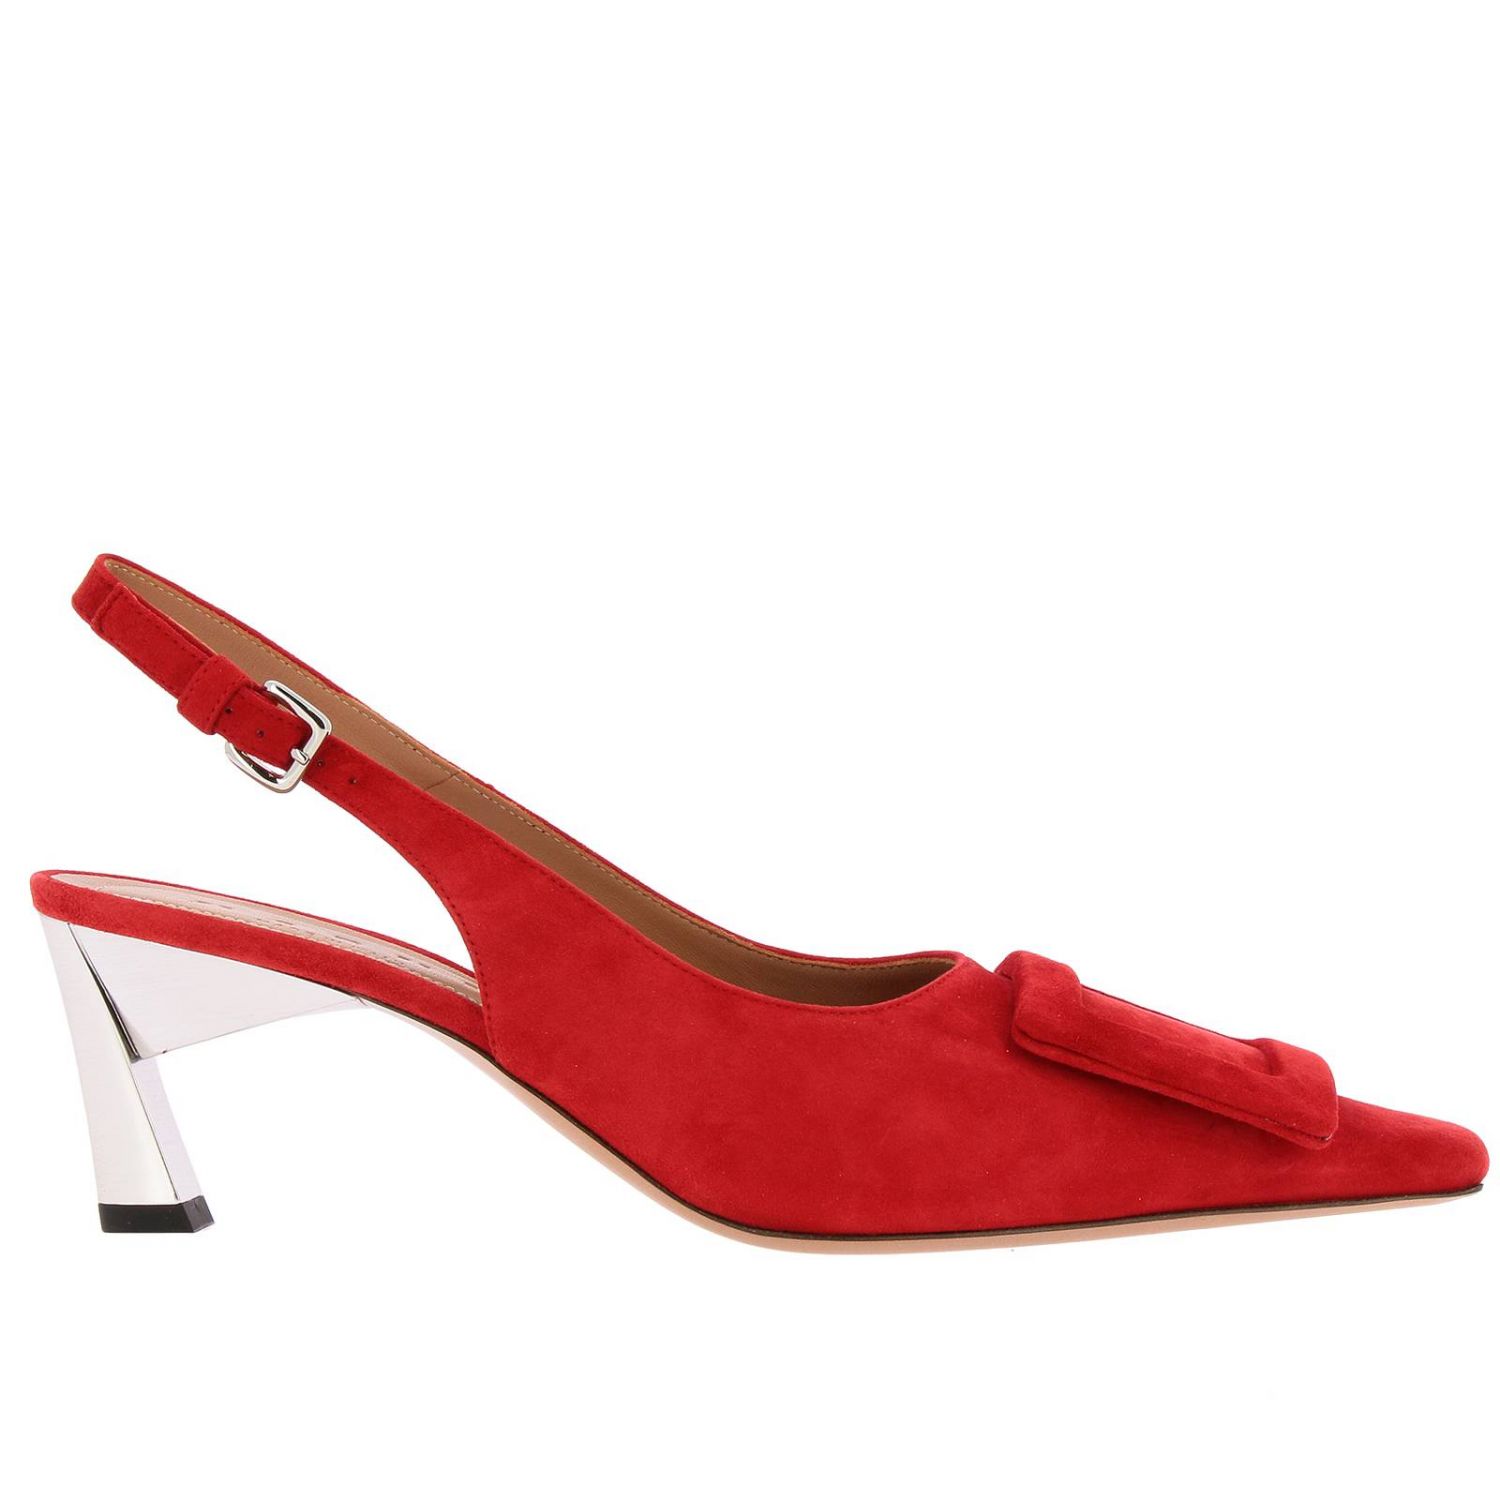 Marni Outlet: Flat shoes women | Flat Shoes Marni Women Red | Flat ...